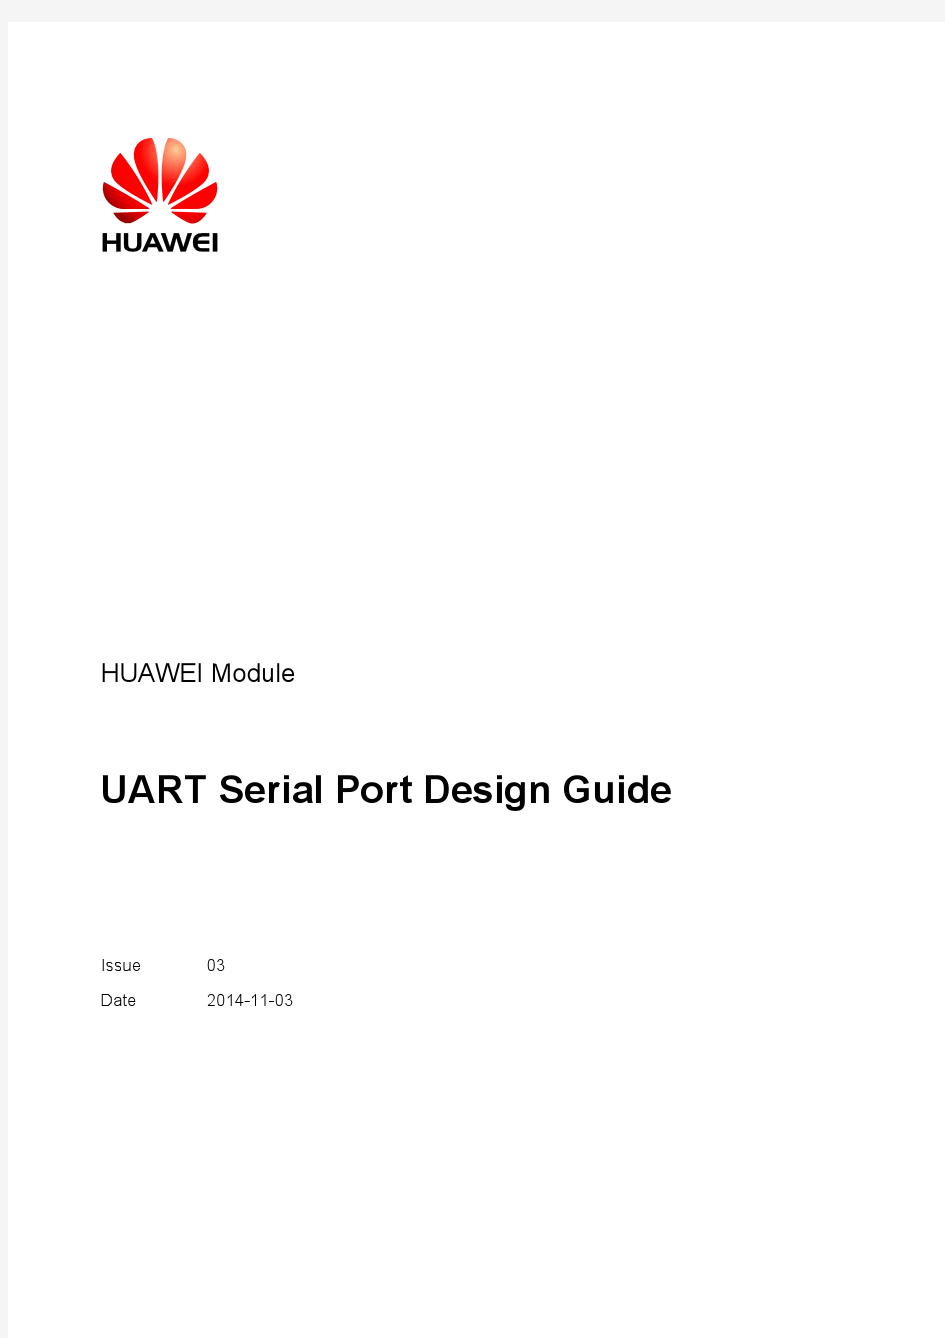 HUAWEI Module UART Serial Port Design Guide-(V100R001_03, English)